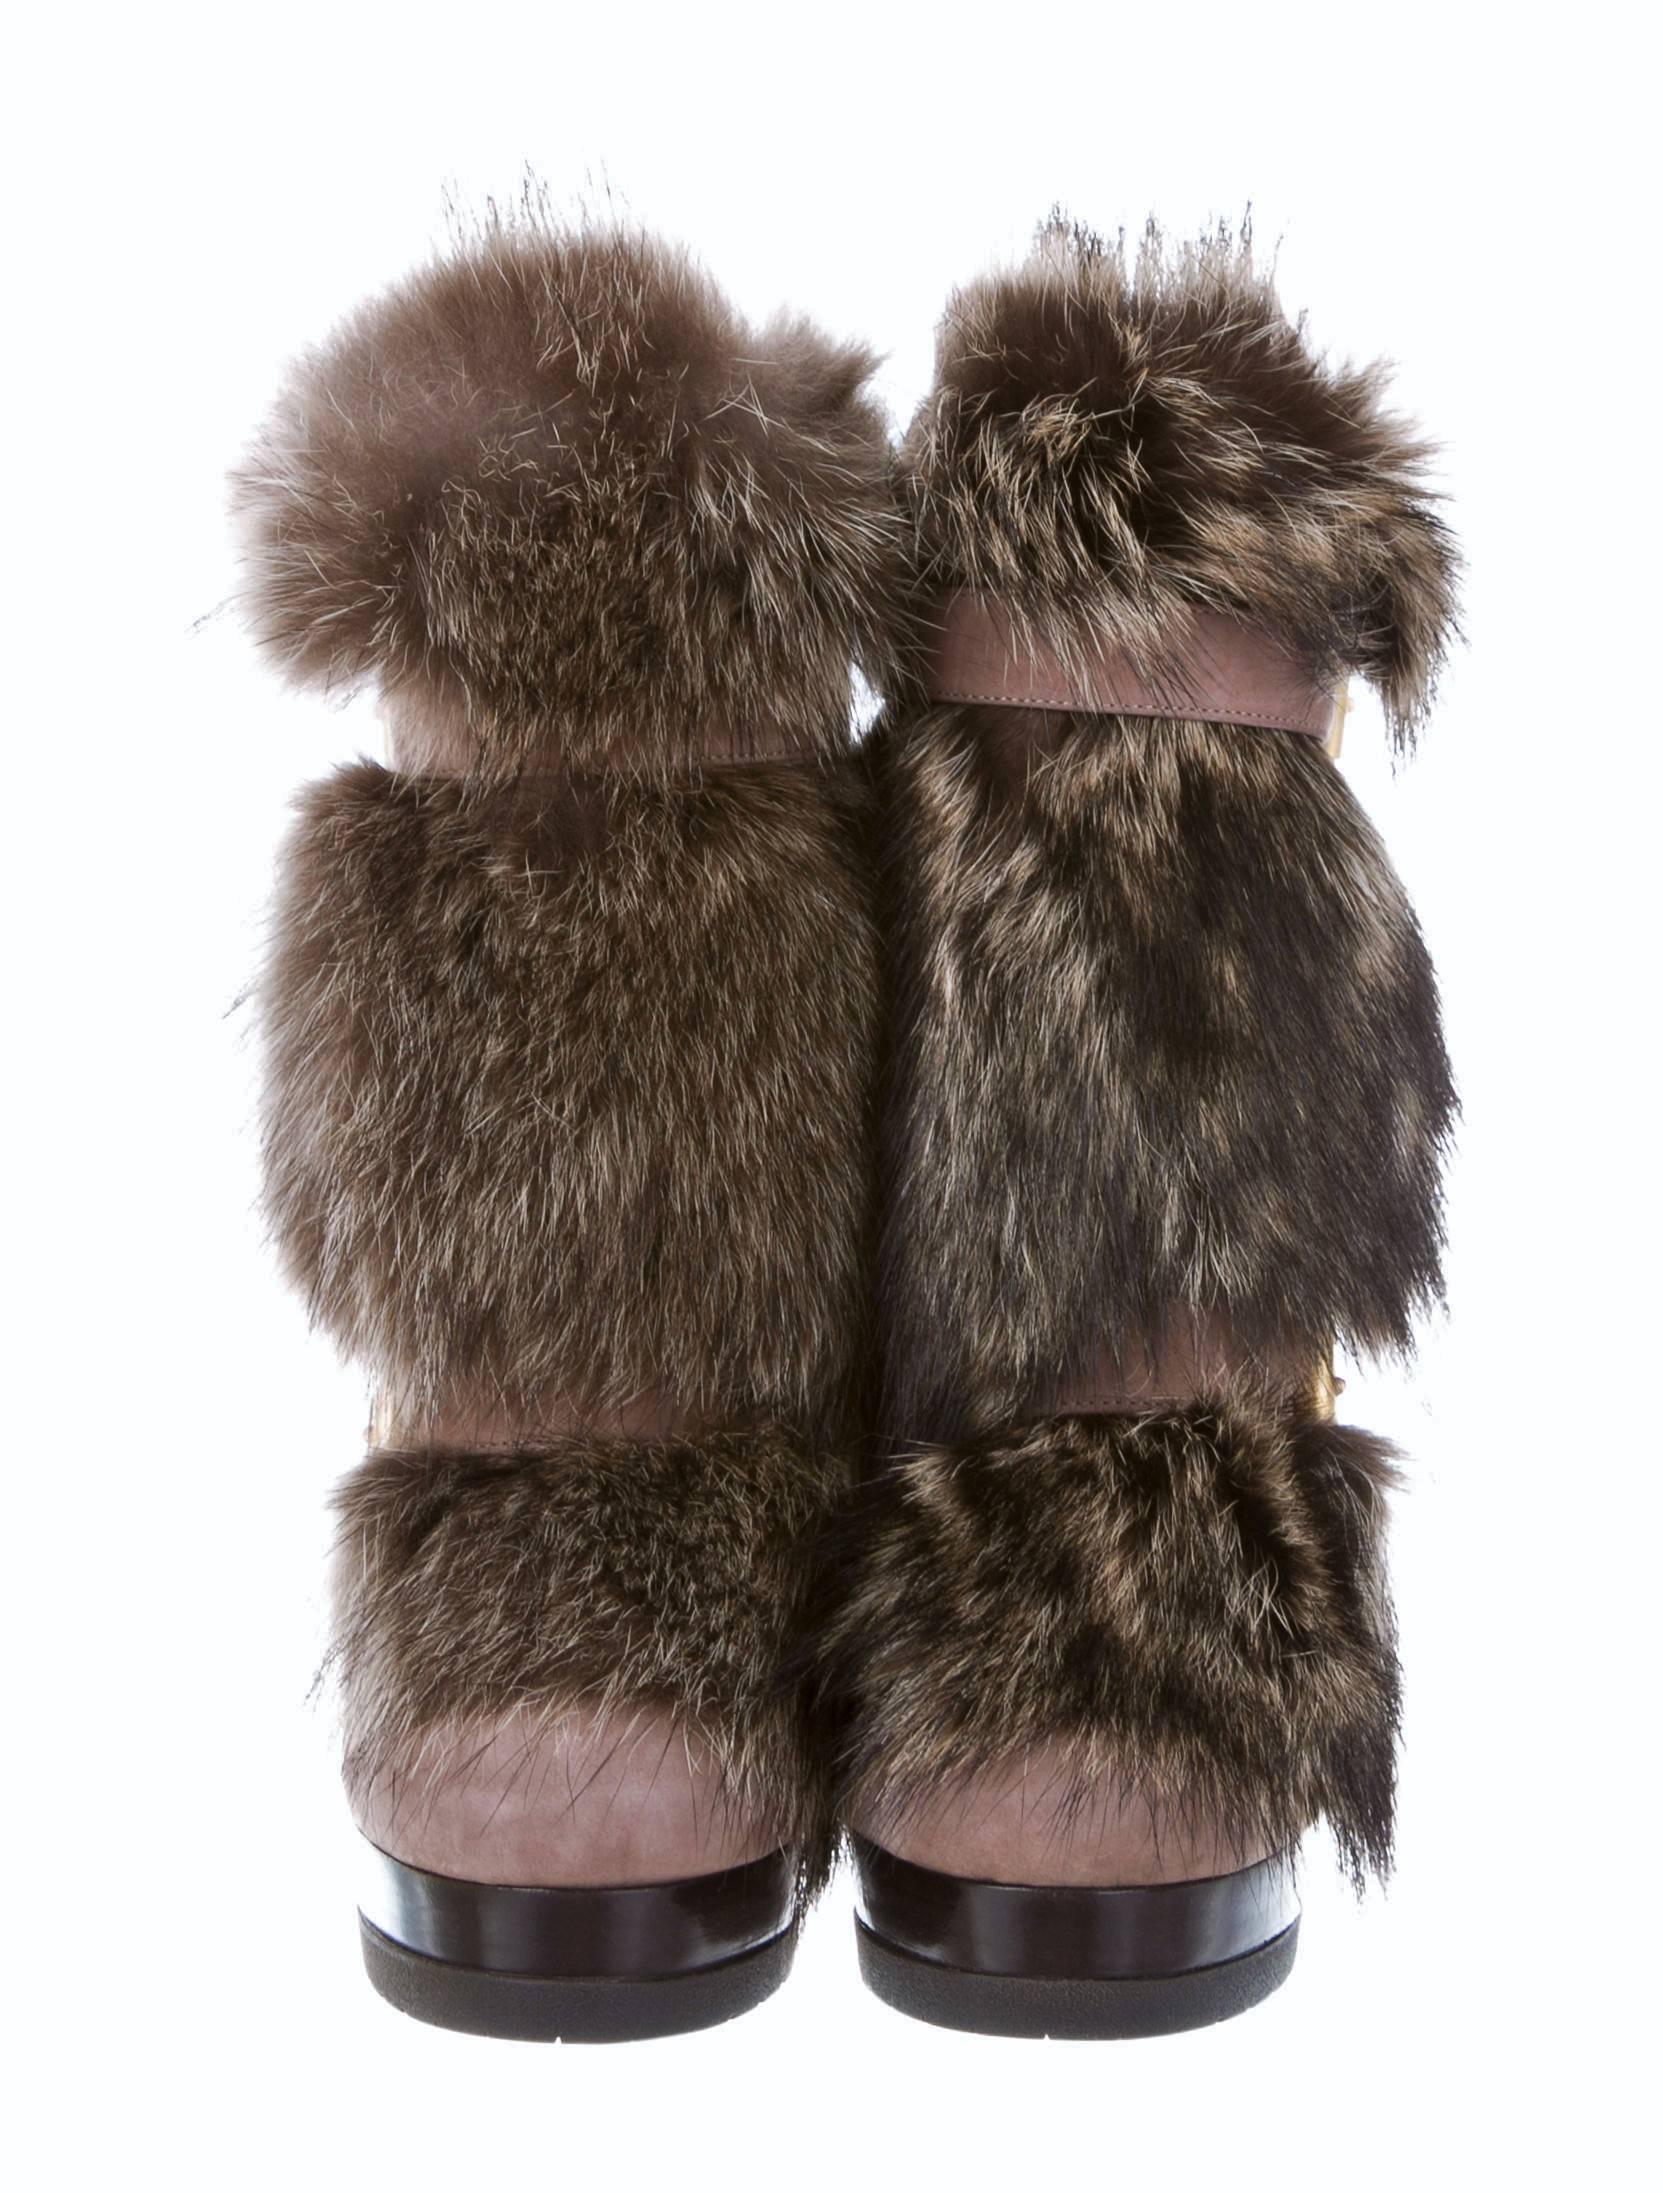 Black New Fendi Ad Runway Fur and Suede Platform Boots Booties Sz 38.5